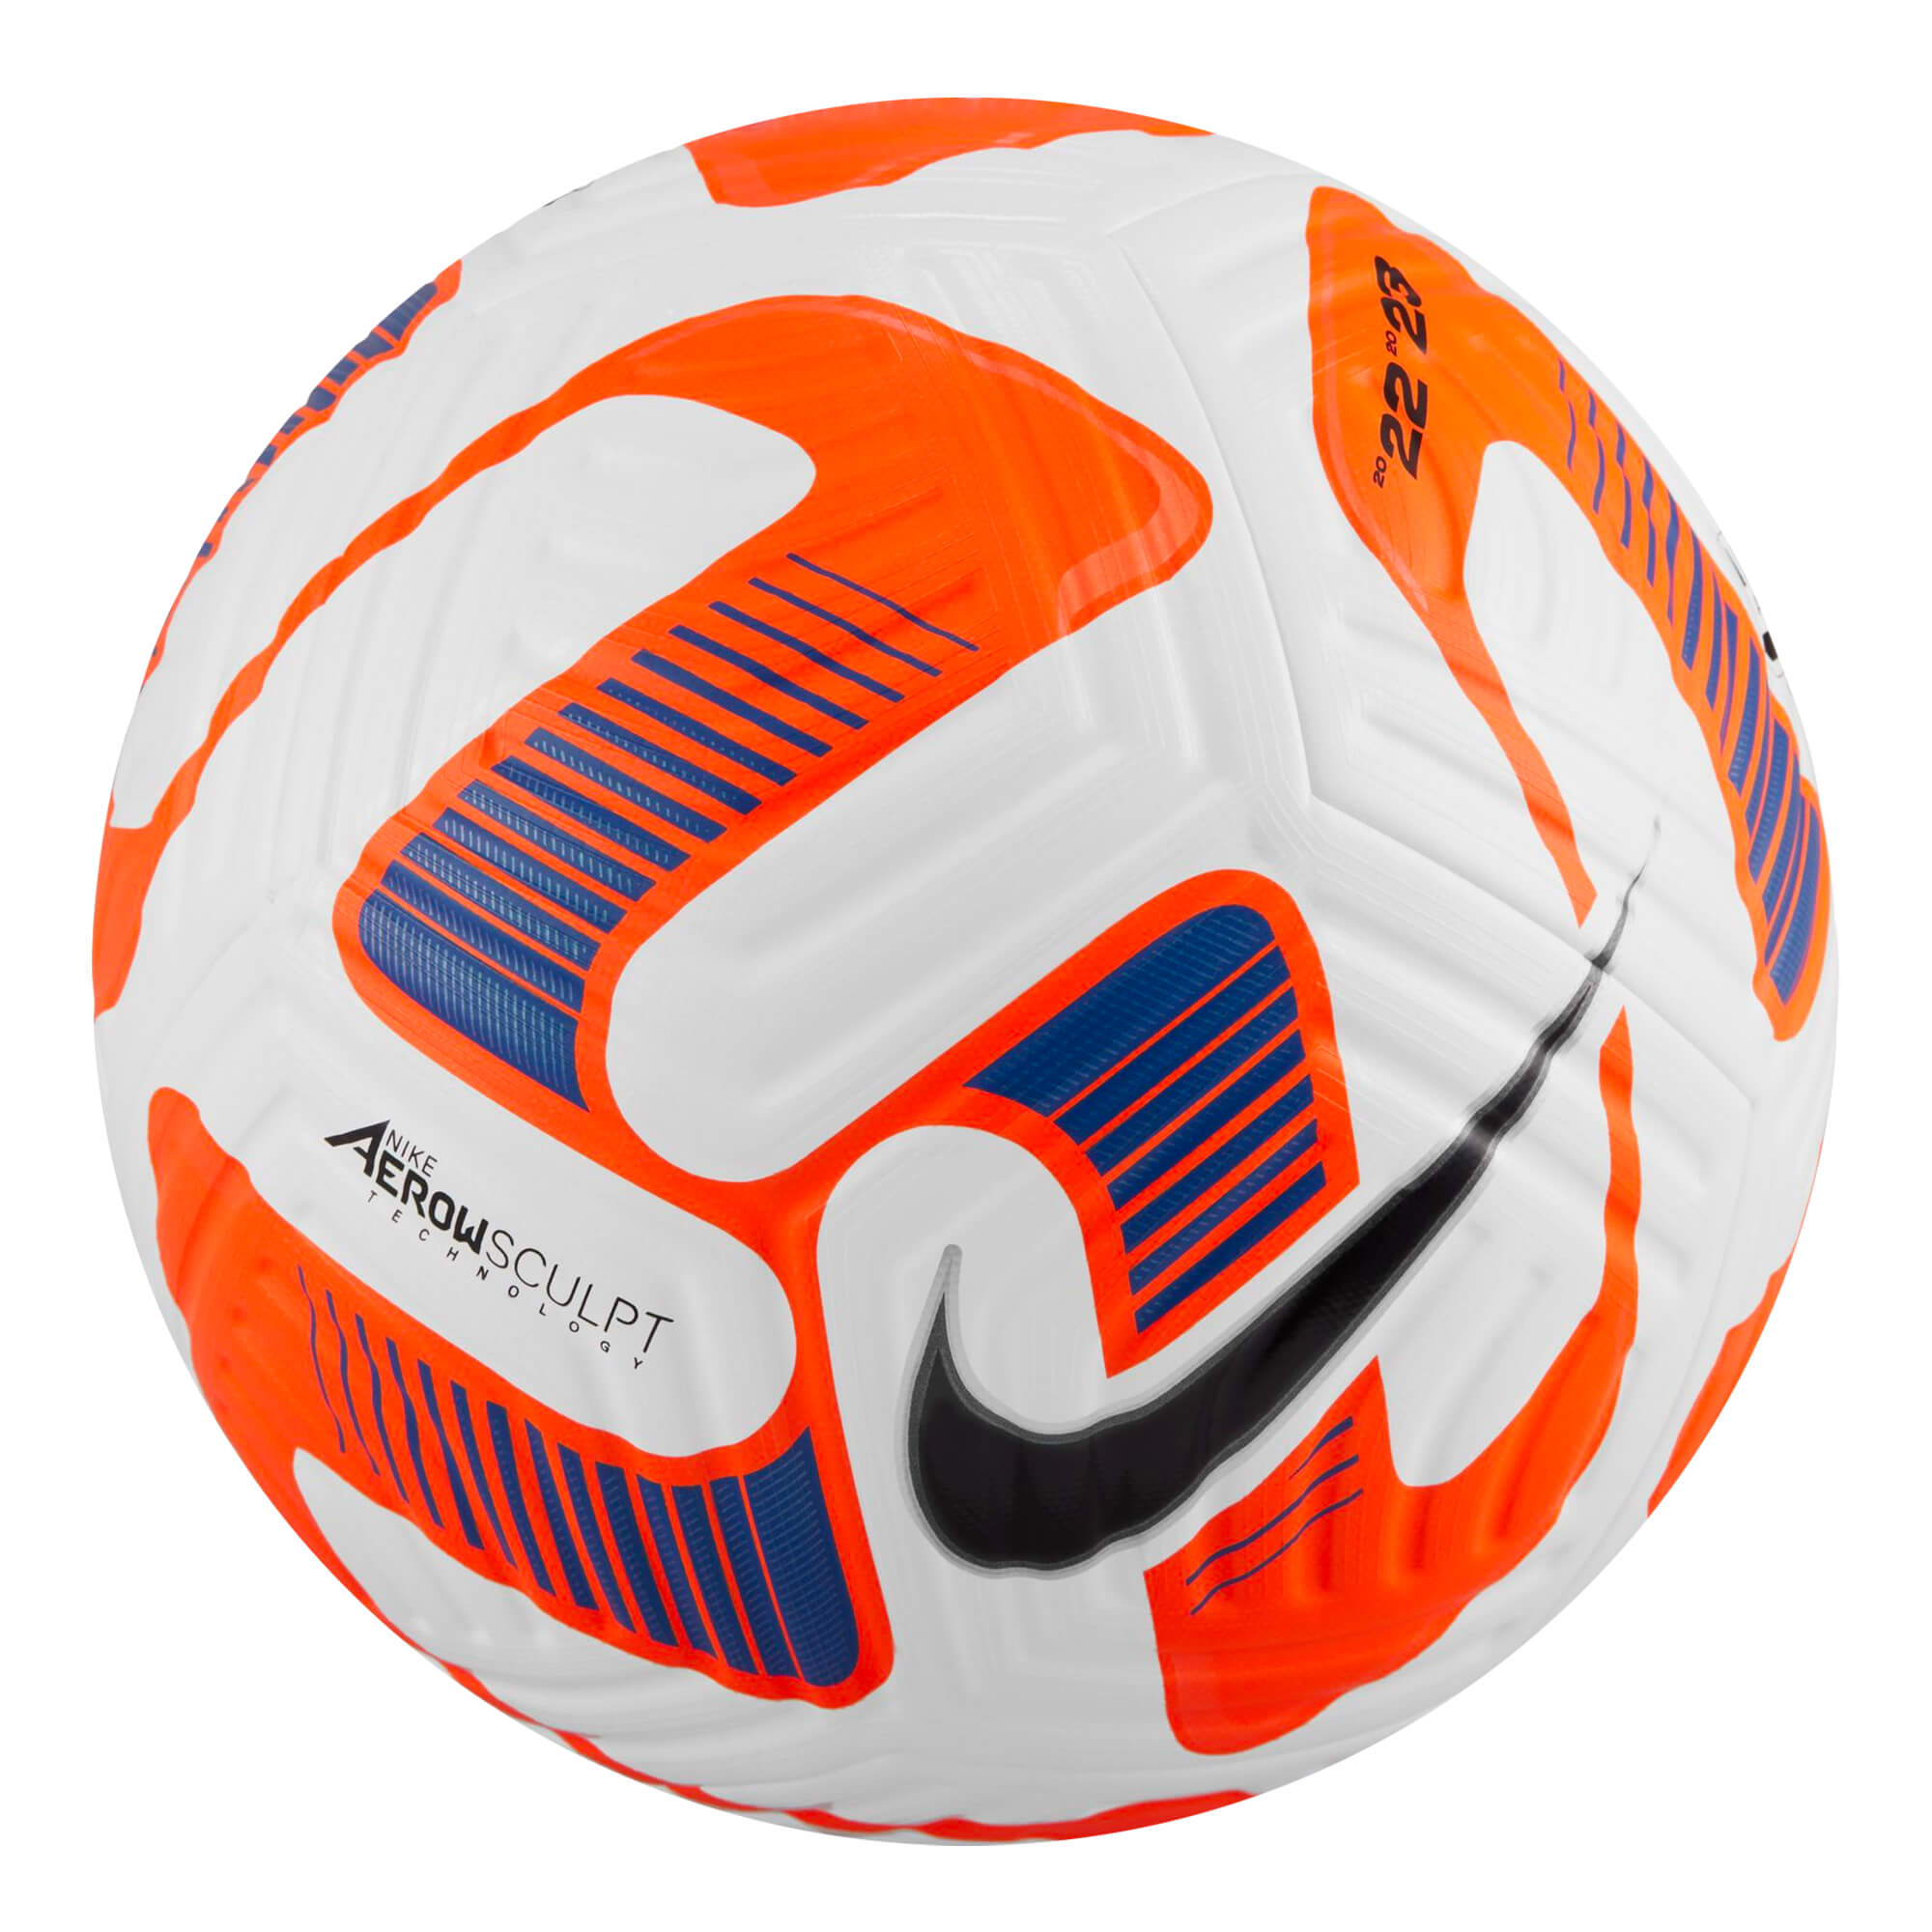 Premier League Flight Soccer Ball.